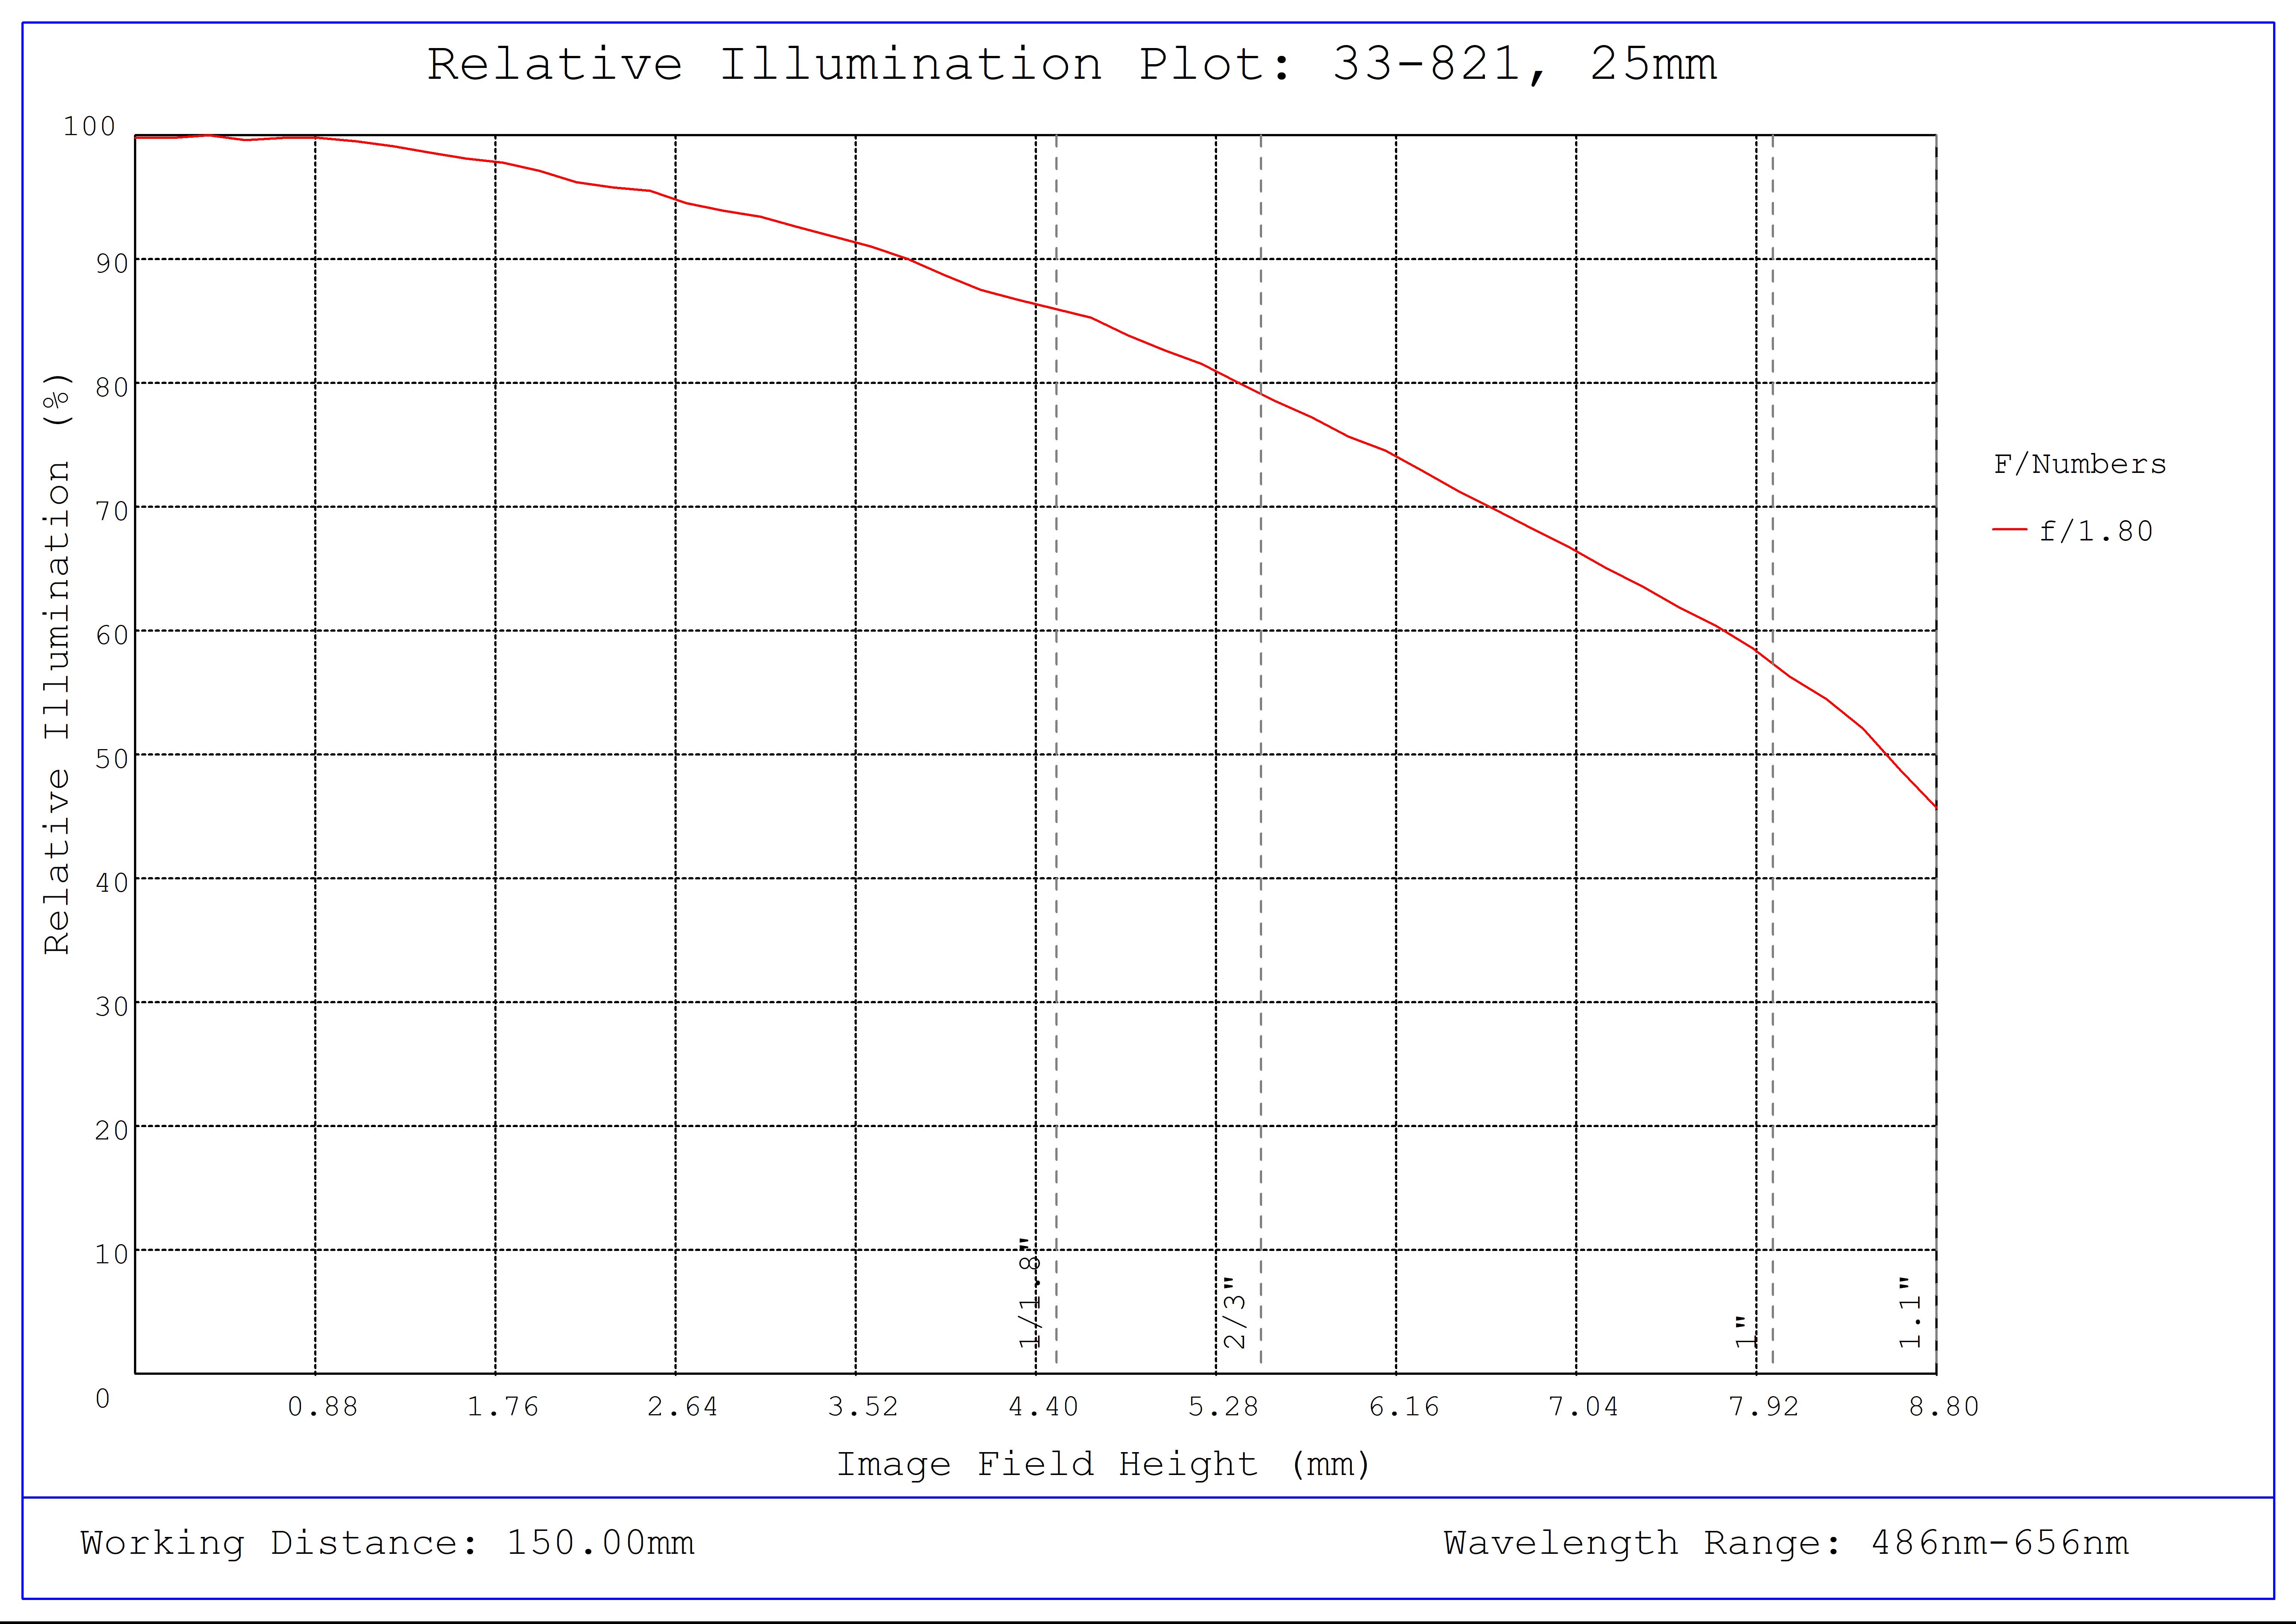 #33-821, 25mm f/1.8, HPi Series Fixed Focal Length Lens, Relative Illumination Plot